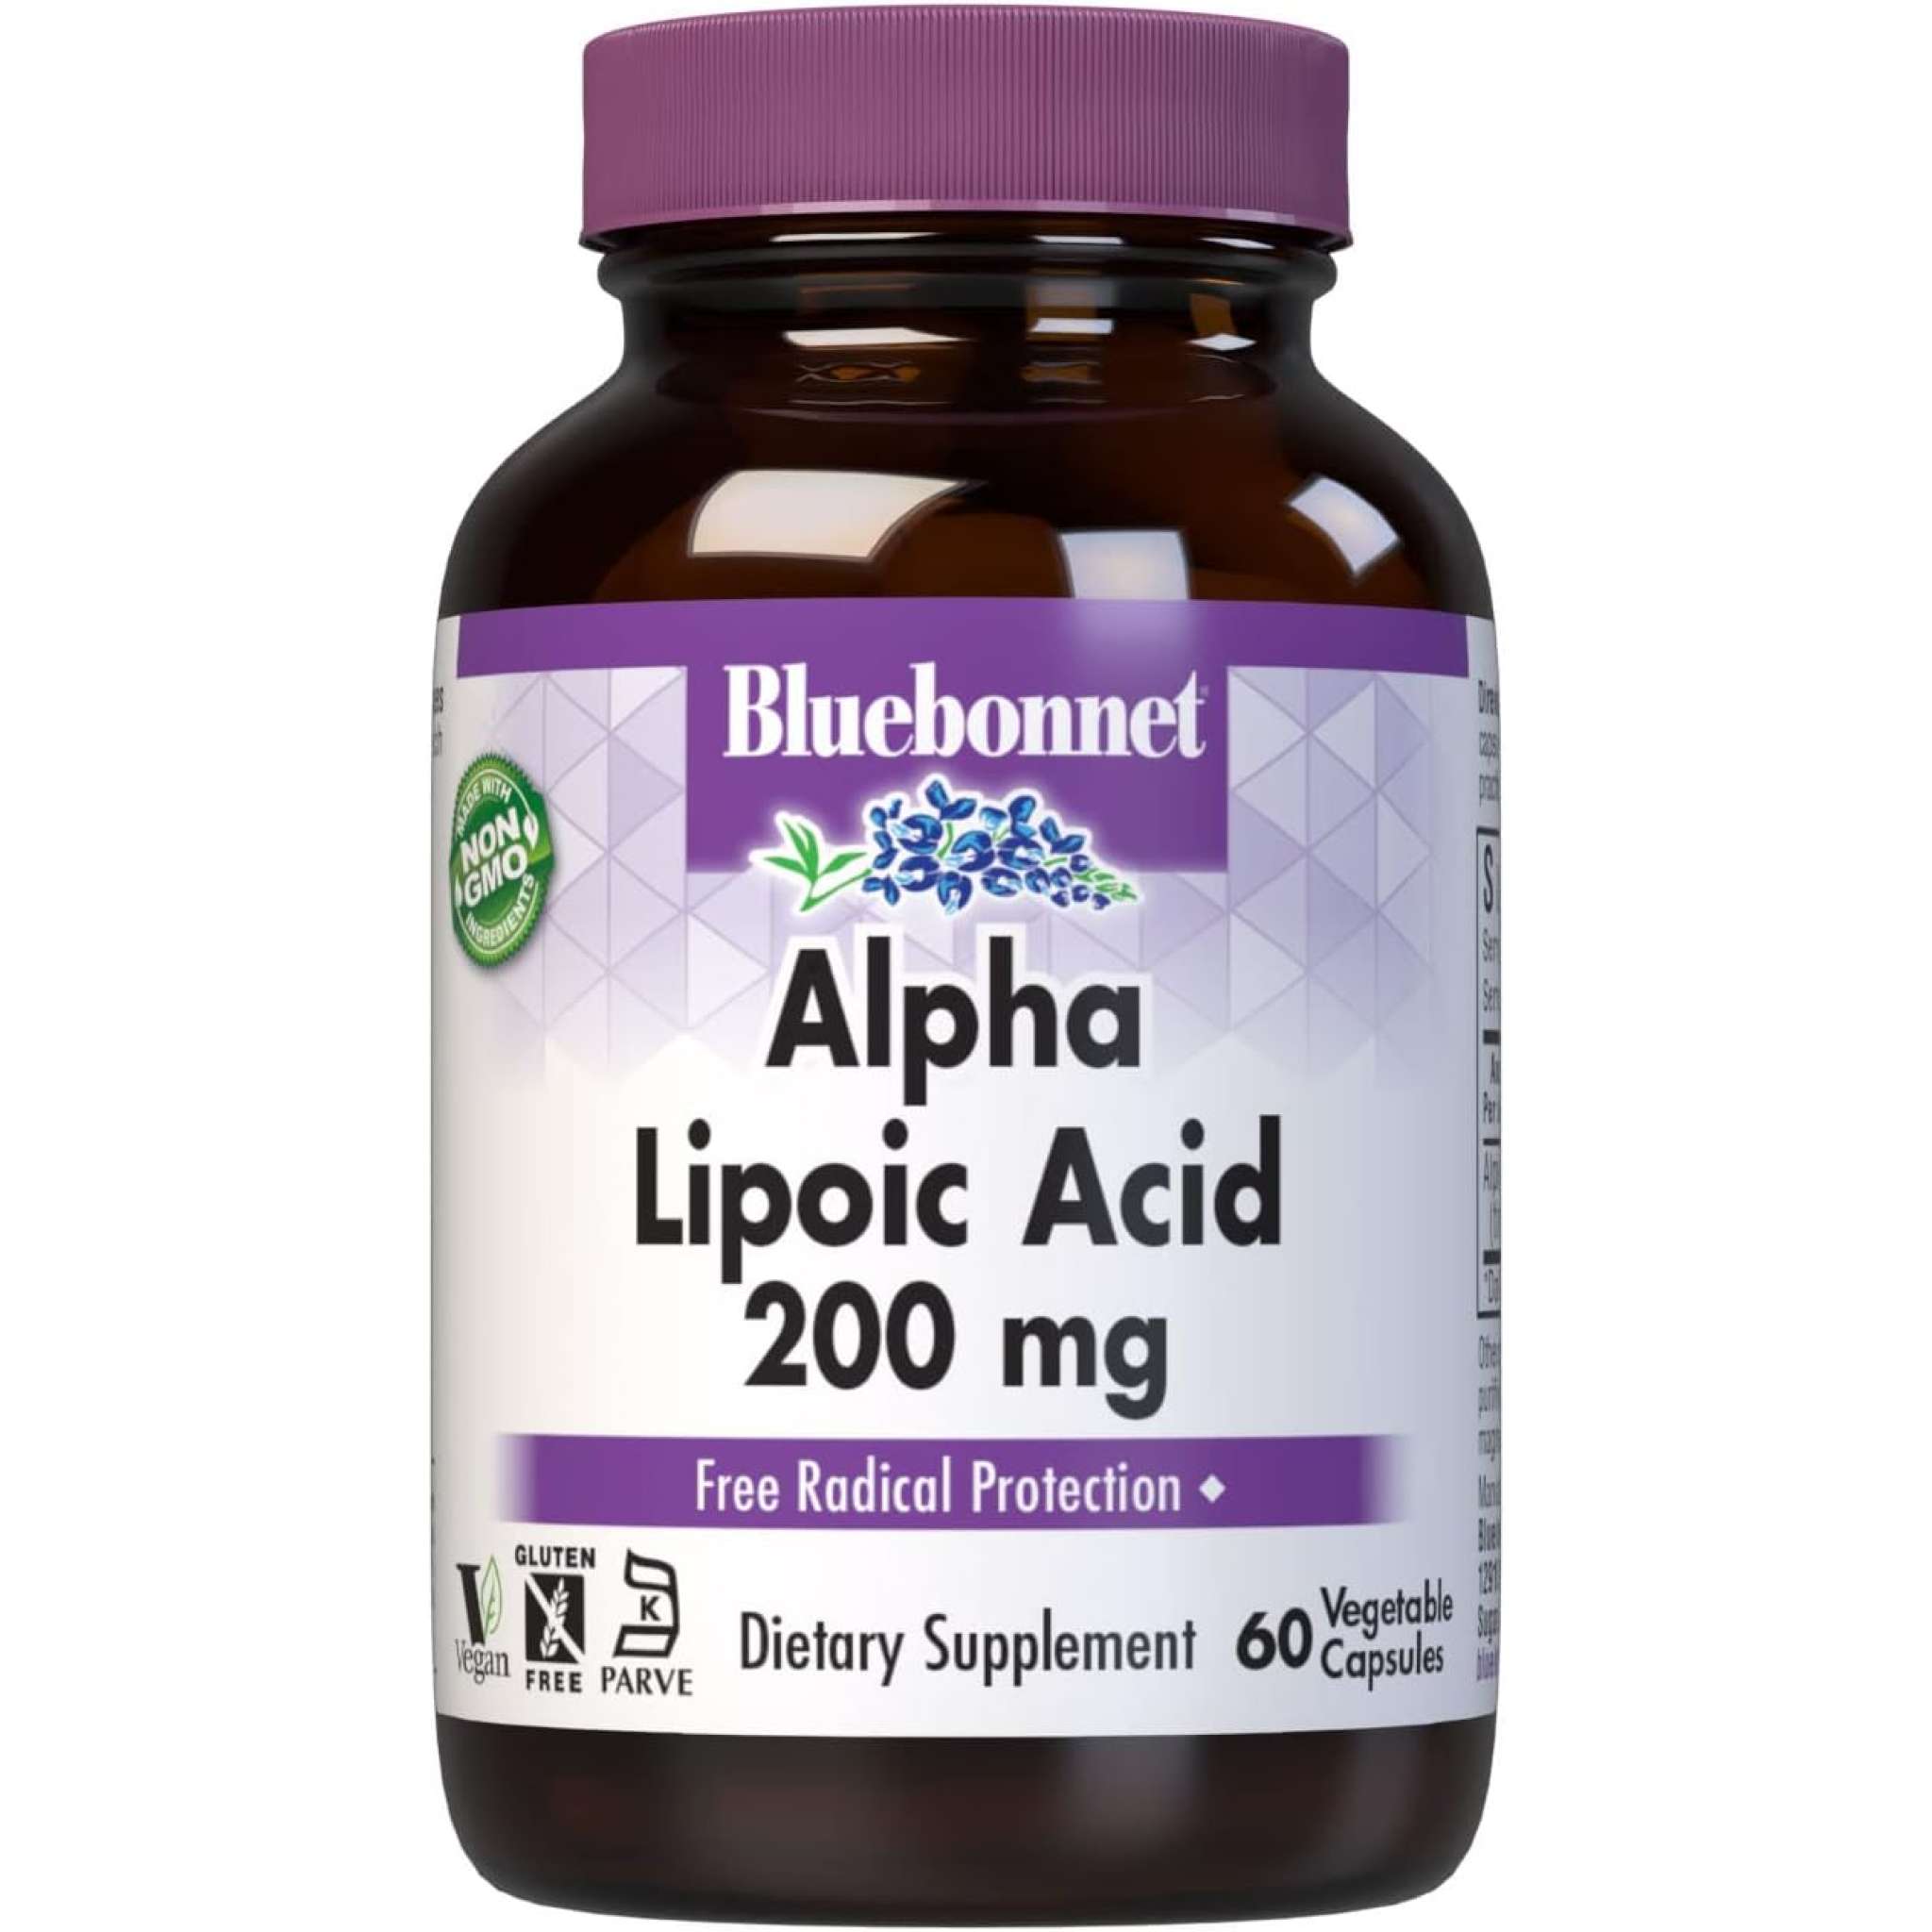 Bluebonnet - Lipoic Acid 200 mg Alpha